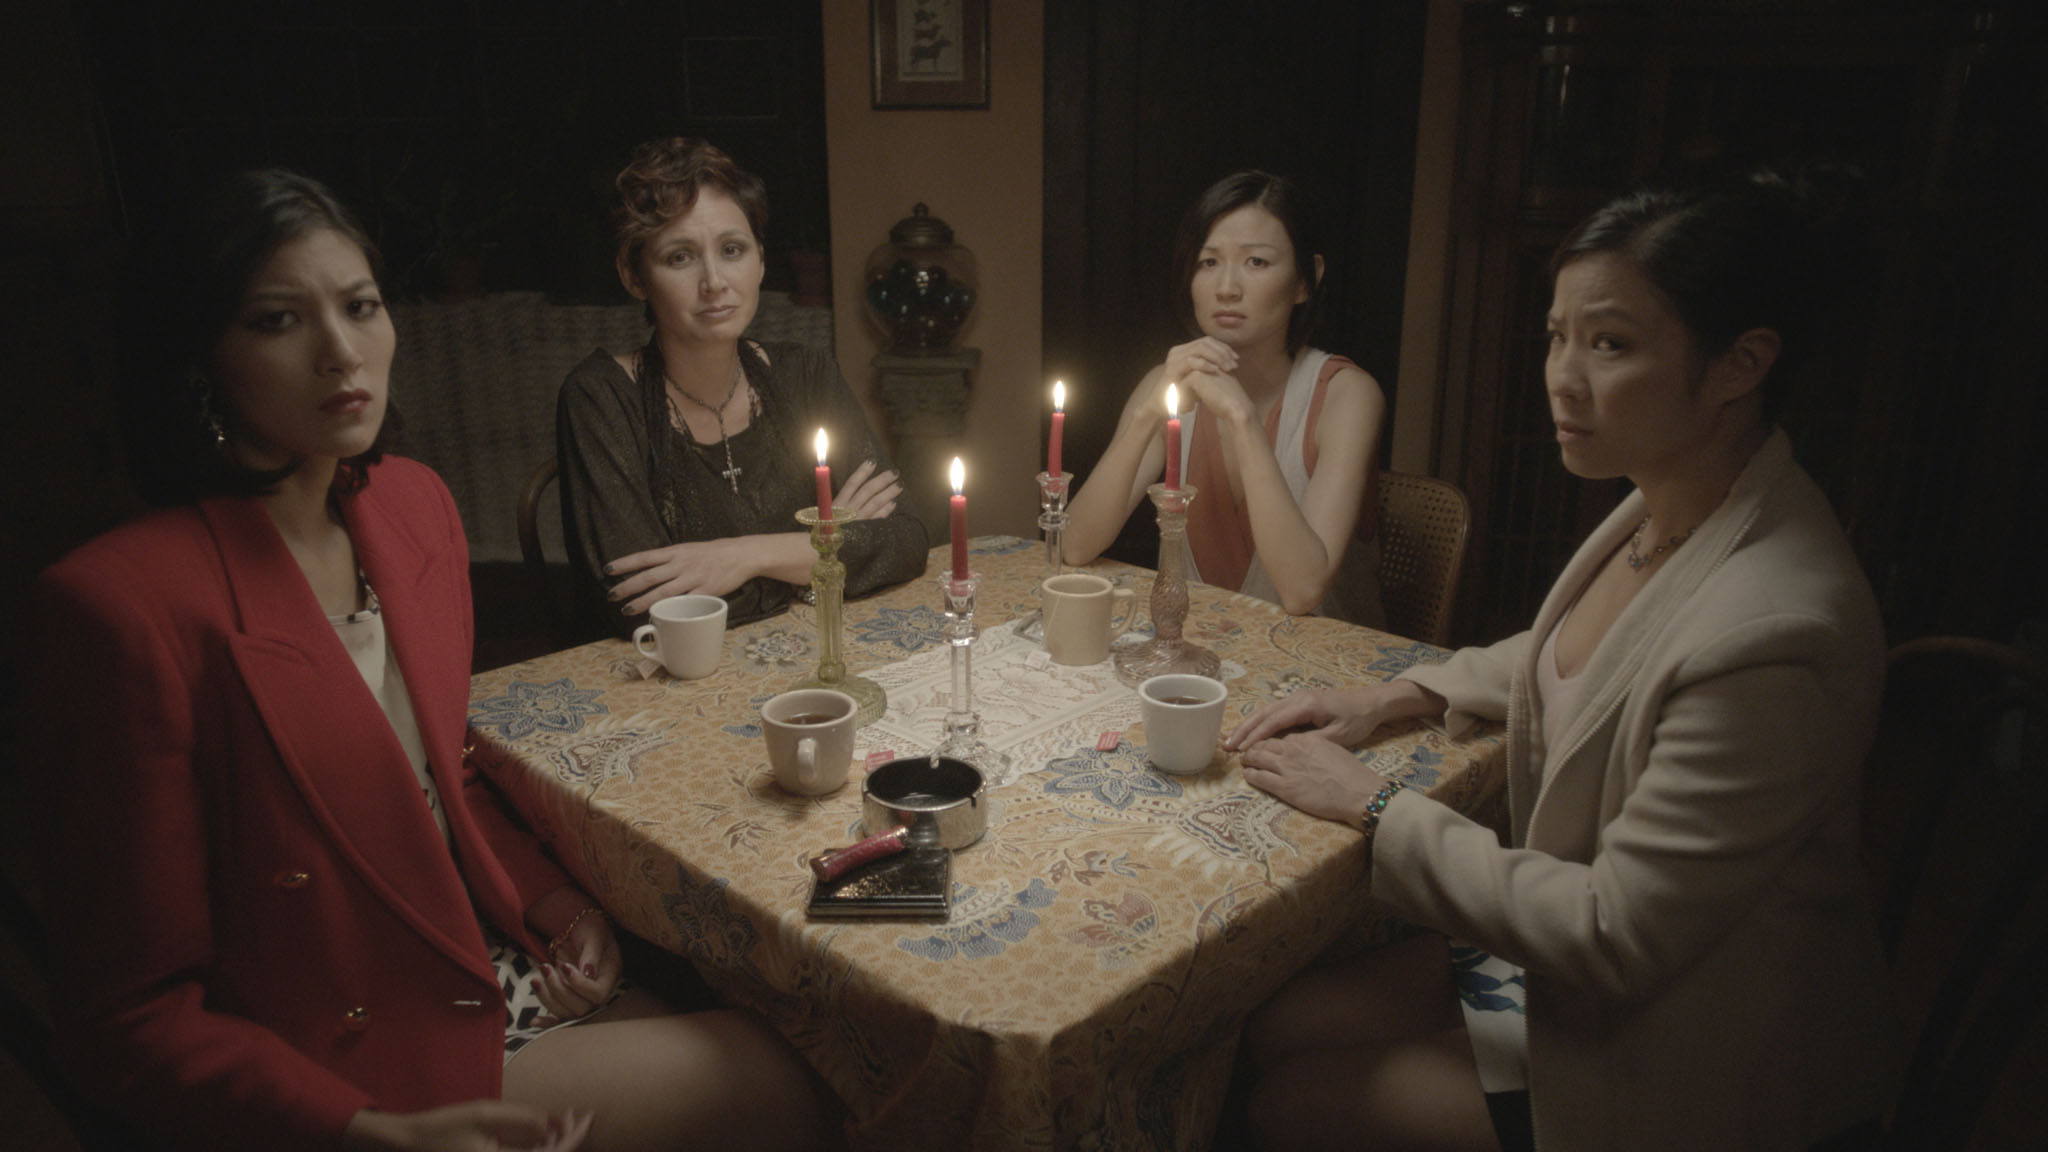 Trailer Premiere Female Asian Cast Leads Supernatural